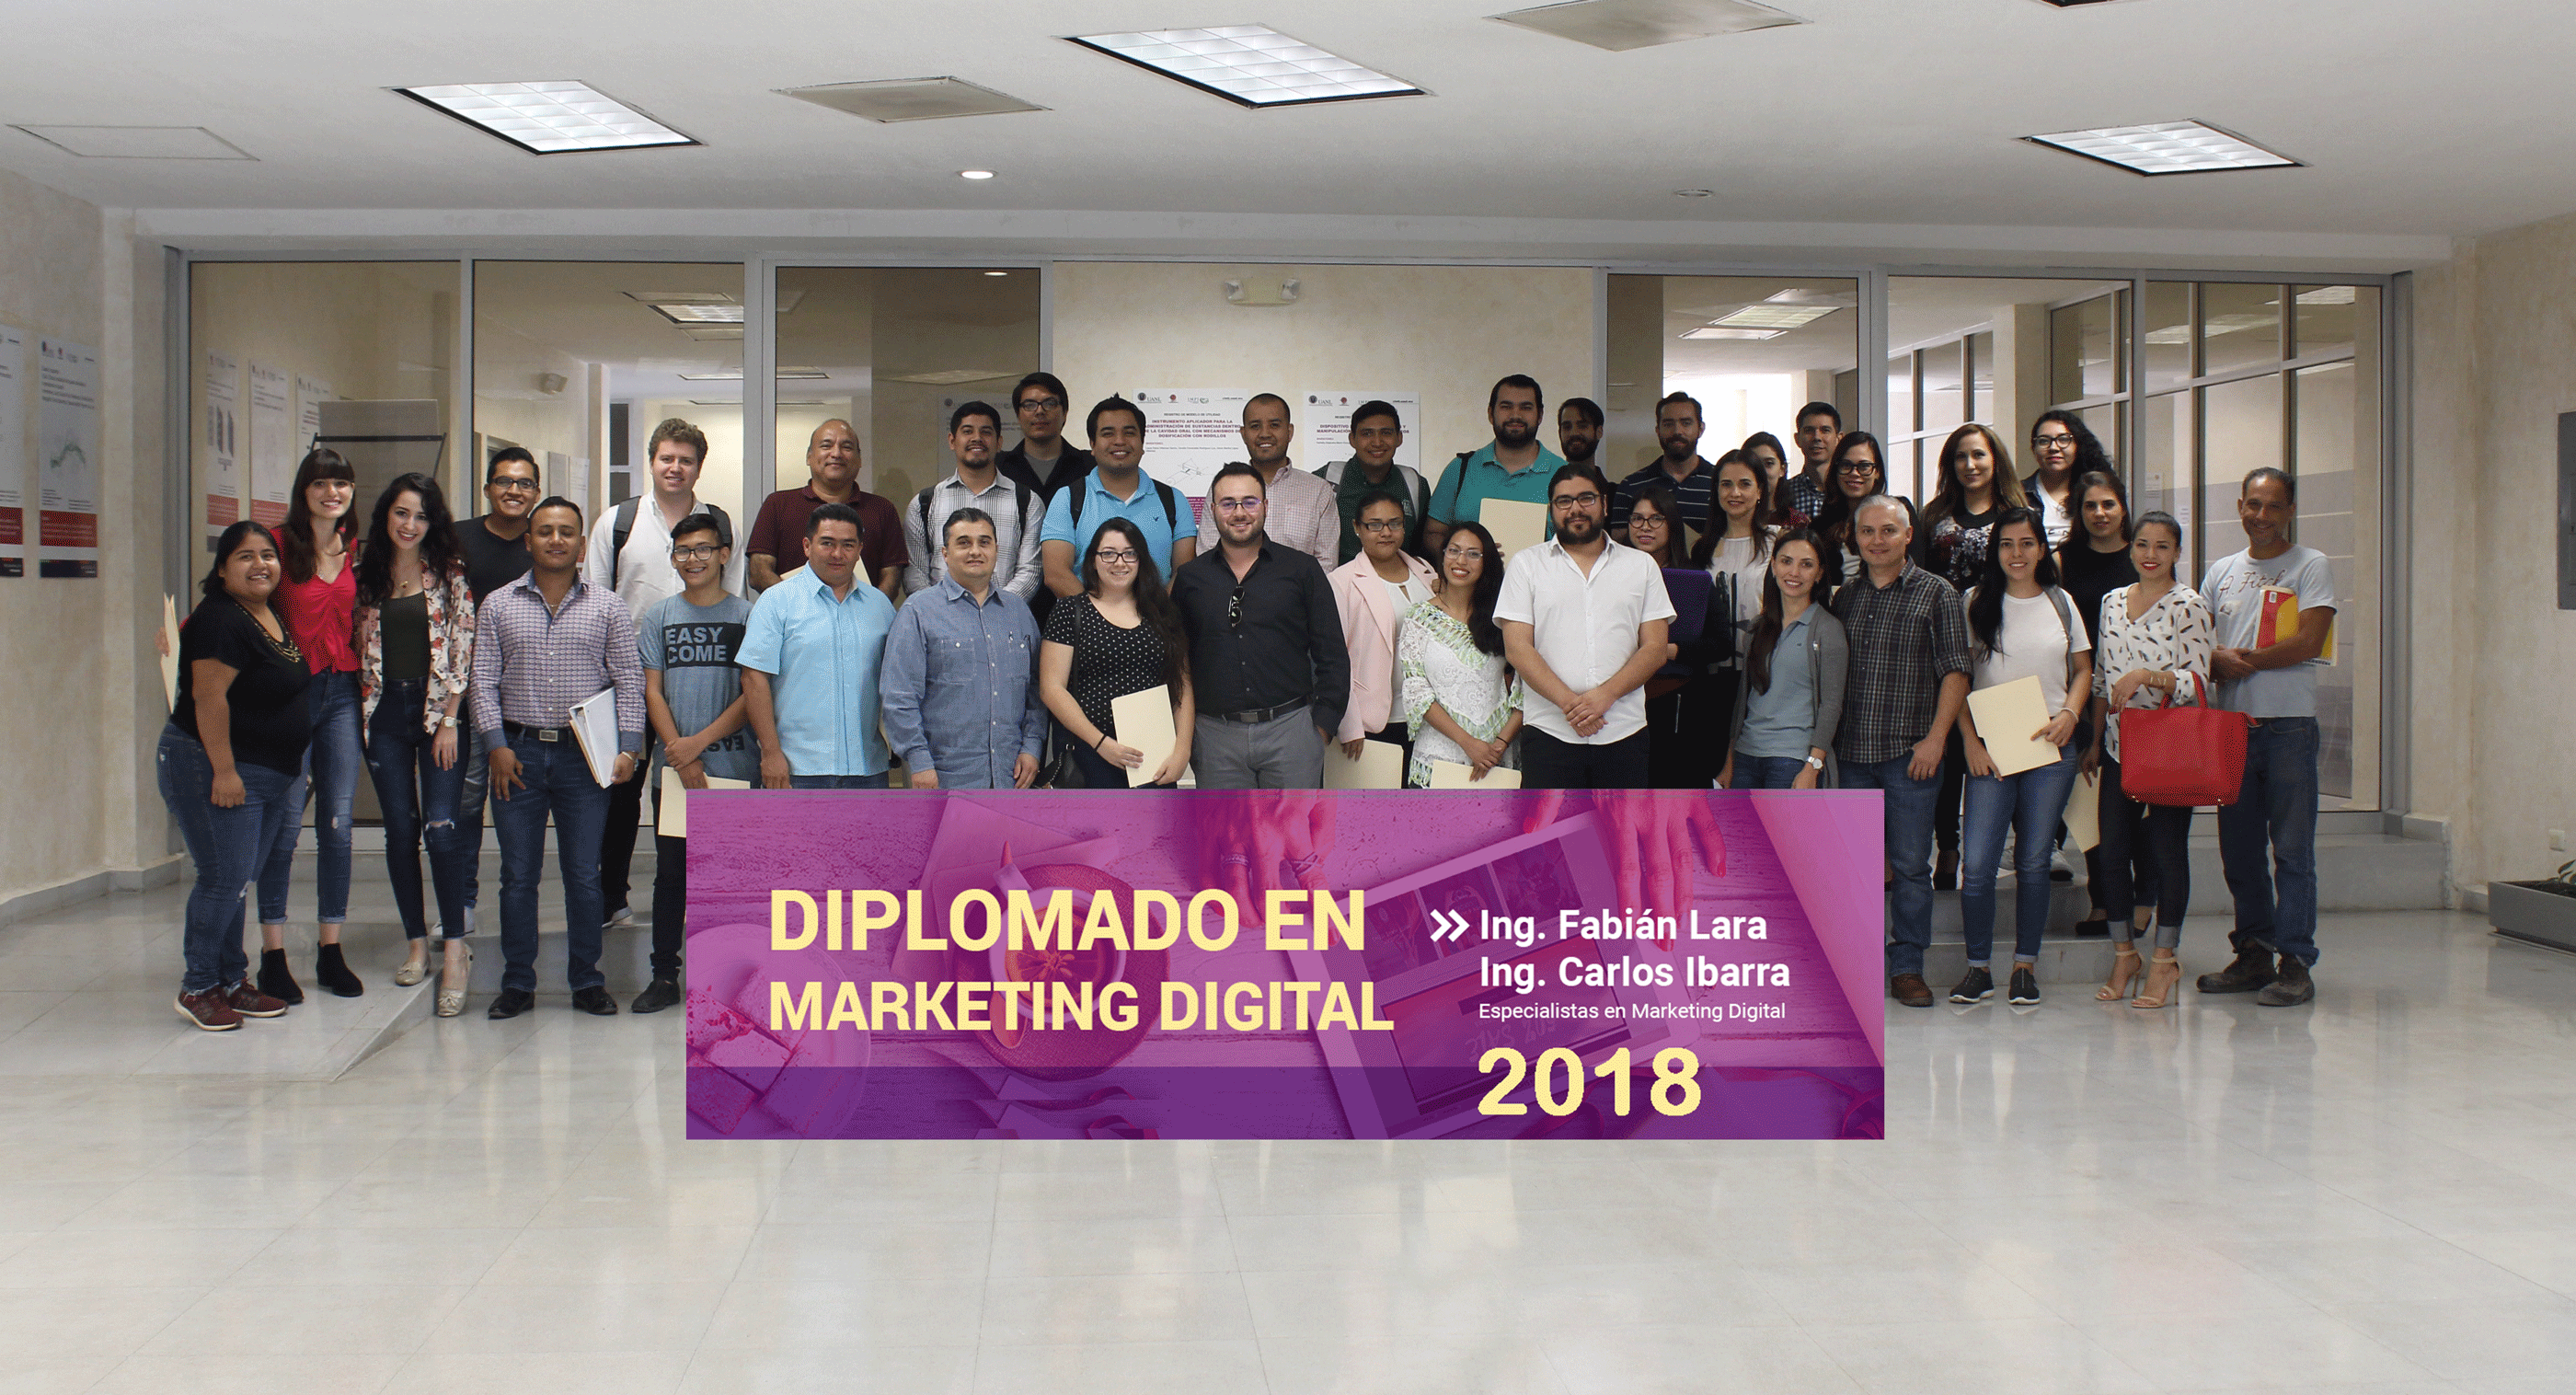 Diplomado de Marketing Digital 2018